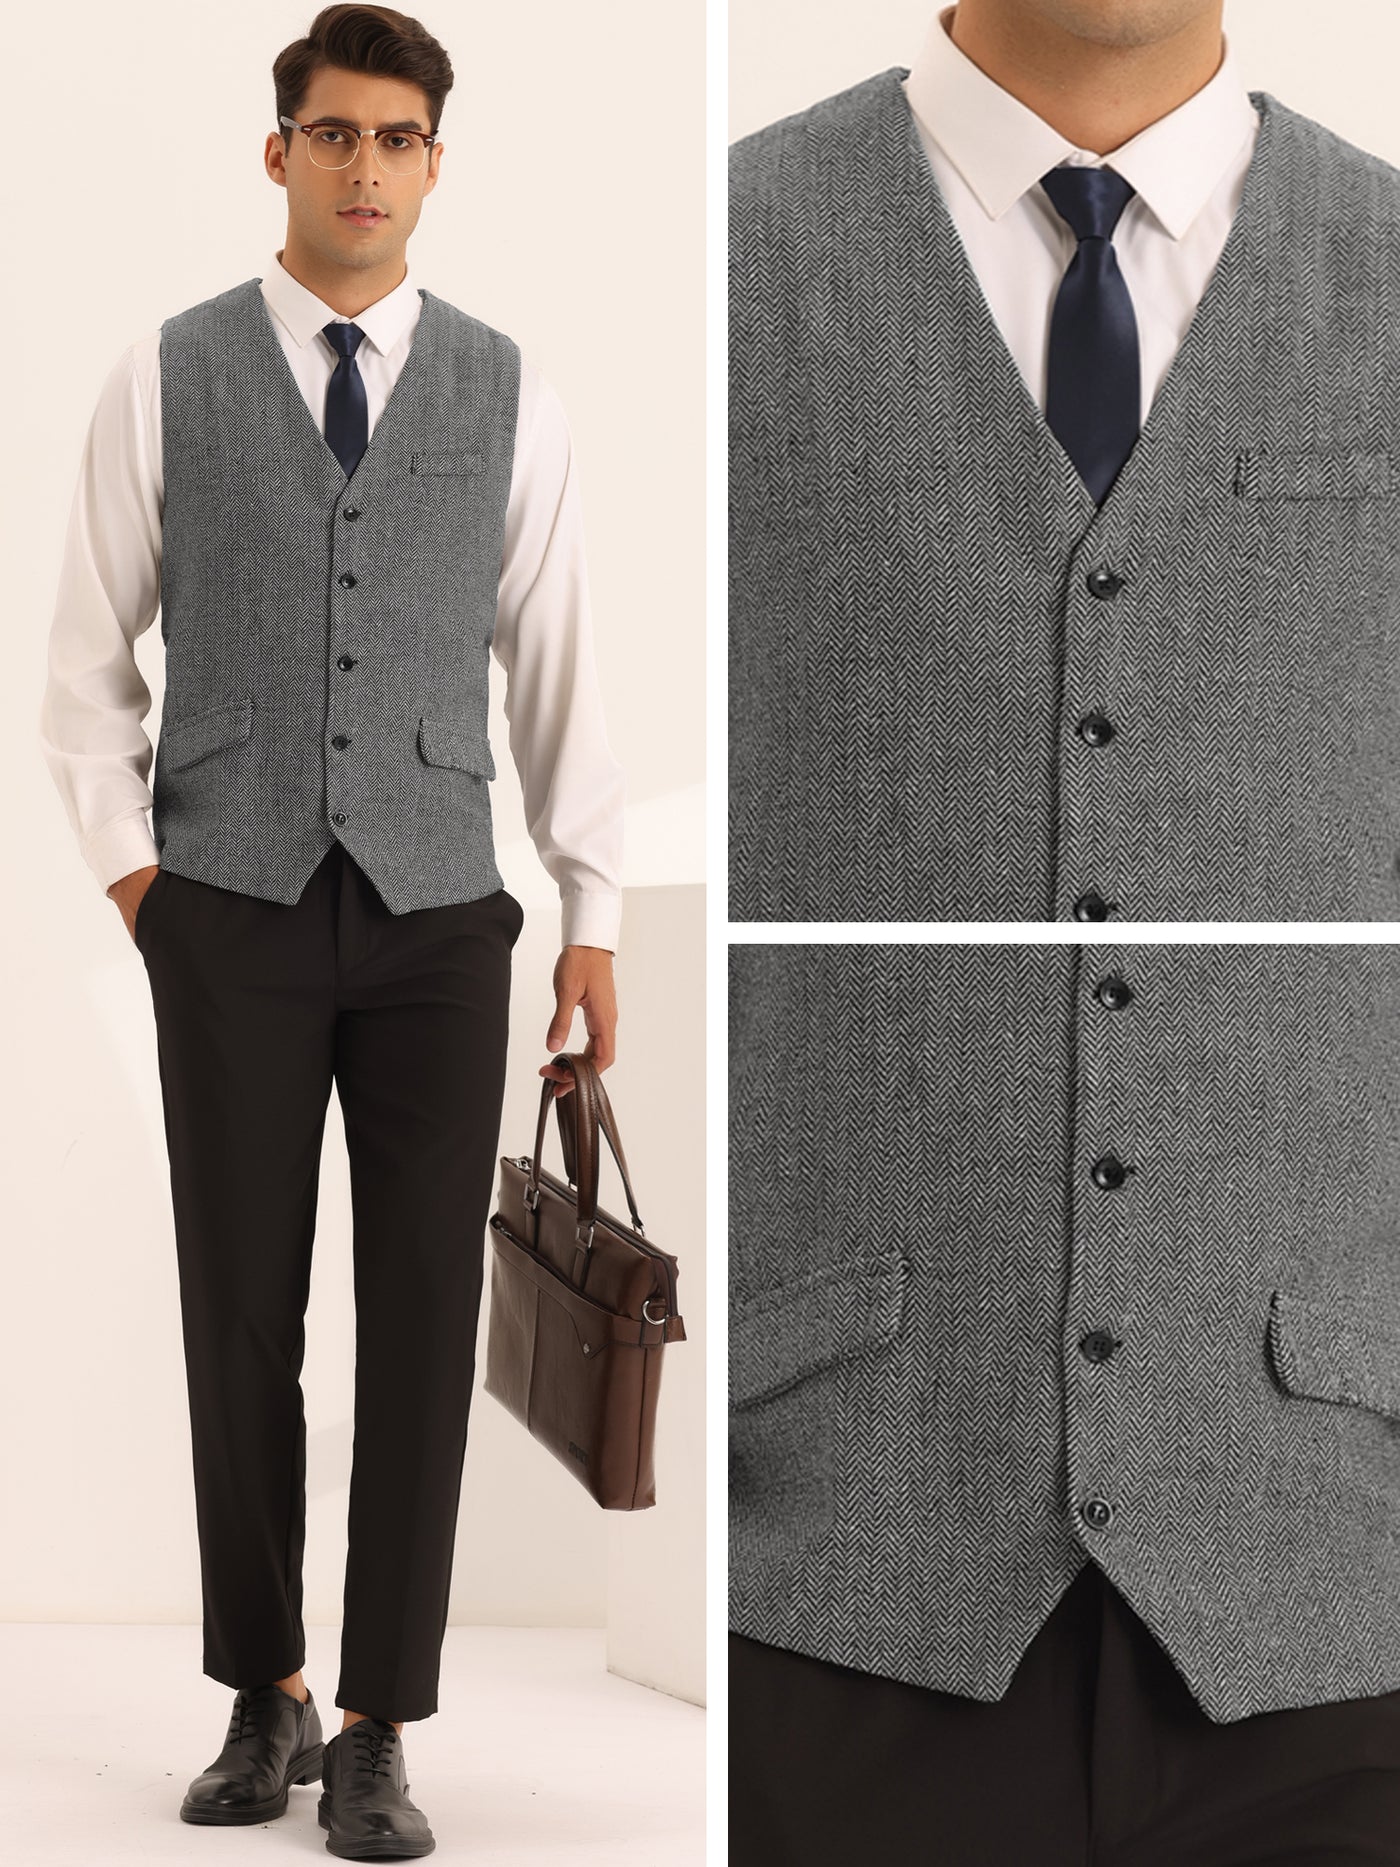 Bublédon Herringbone Waistcoat for Men's Slim Fit Single Breasted Business Dress Vest